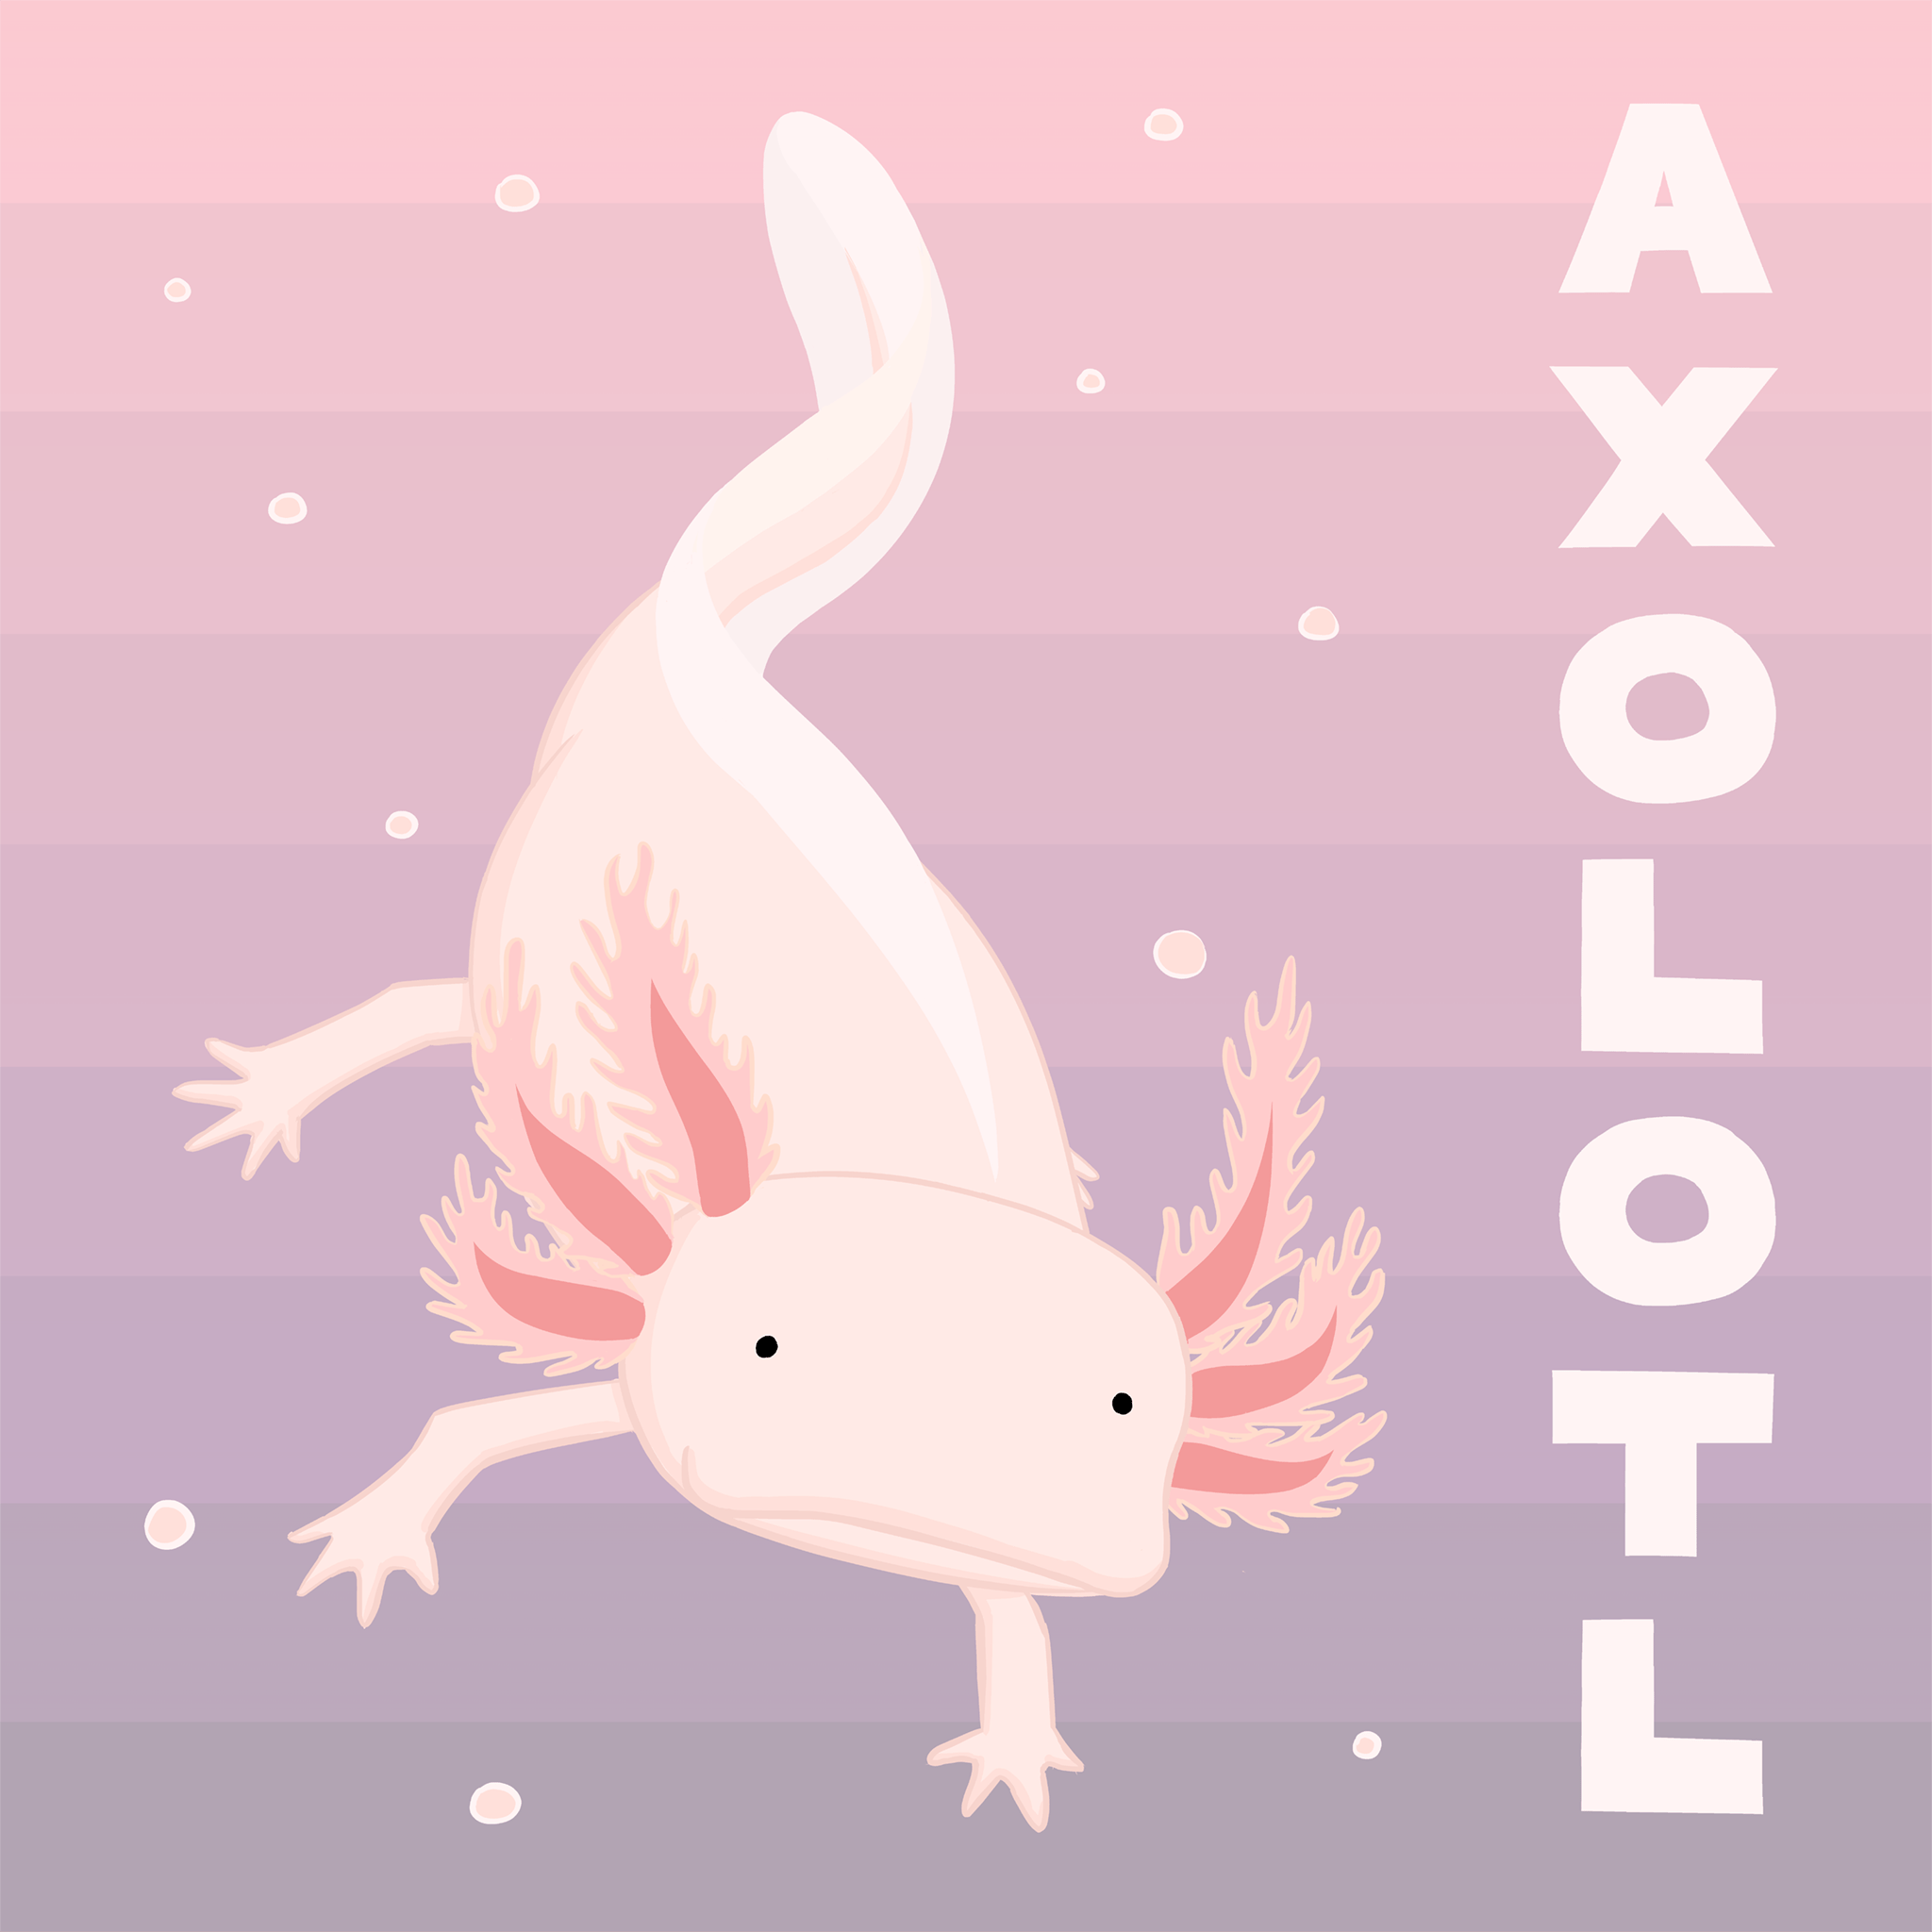 Axolotl Wallpapers Top 10 Best Axolotl iPhone Wallpapers  HQ 